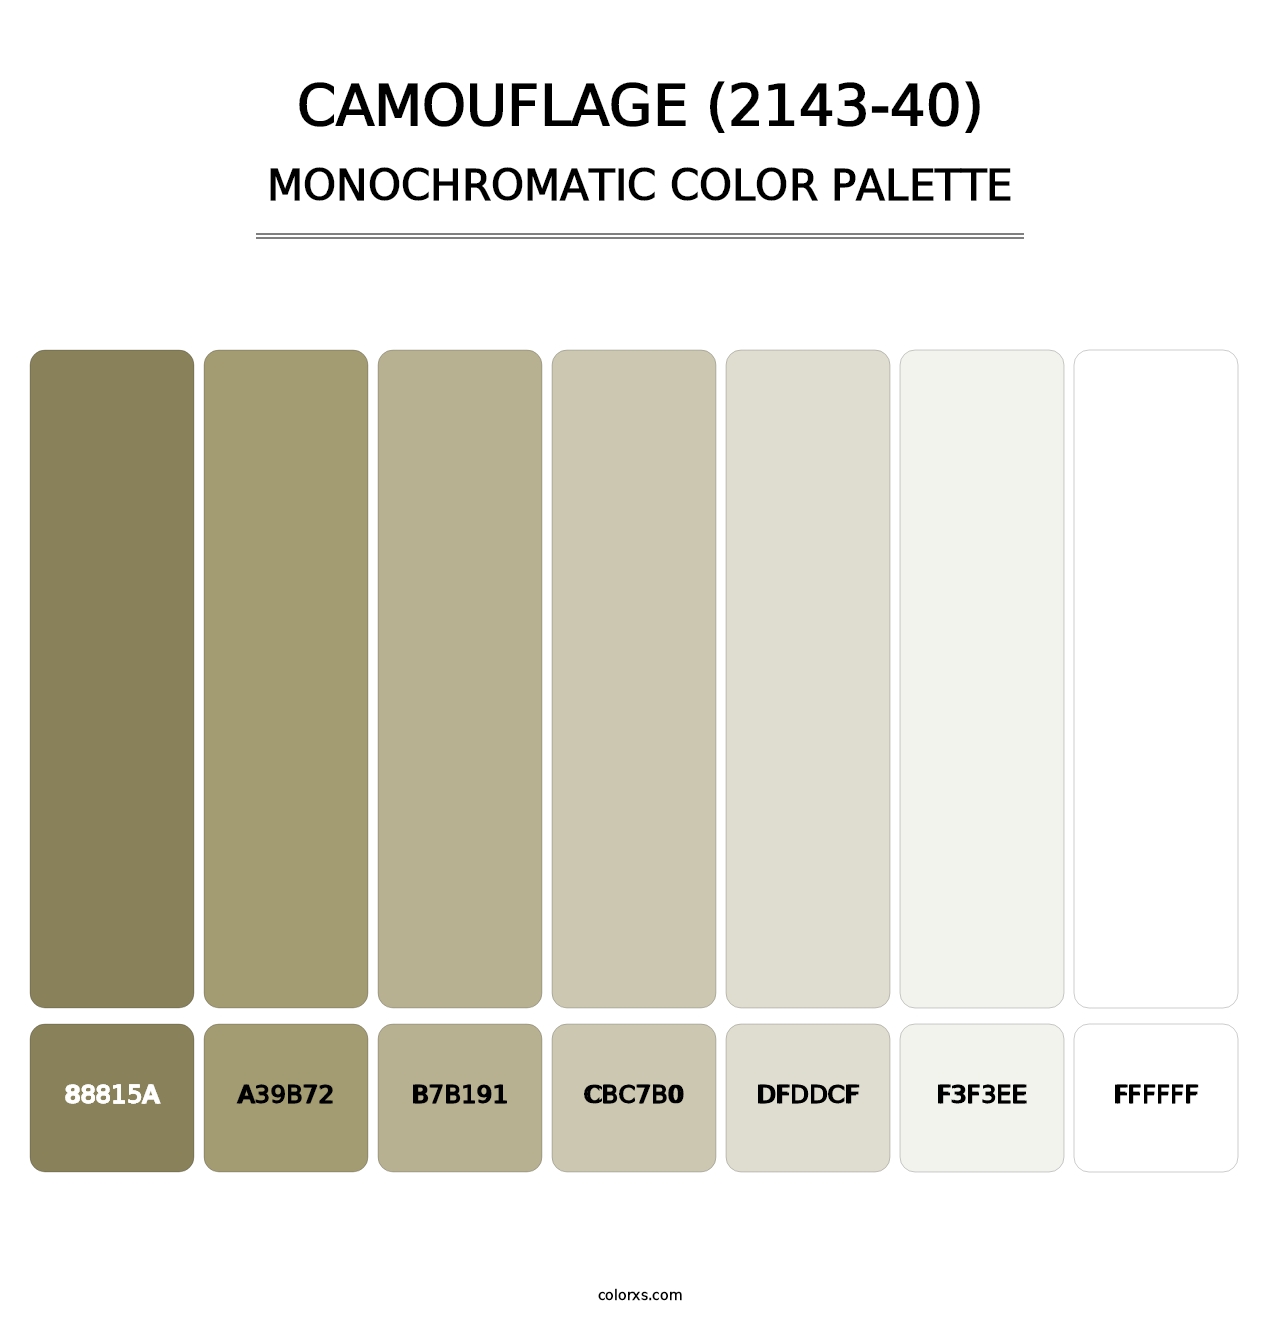 Camouflage (2143-40) - Monochromatic Color Palette